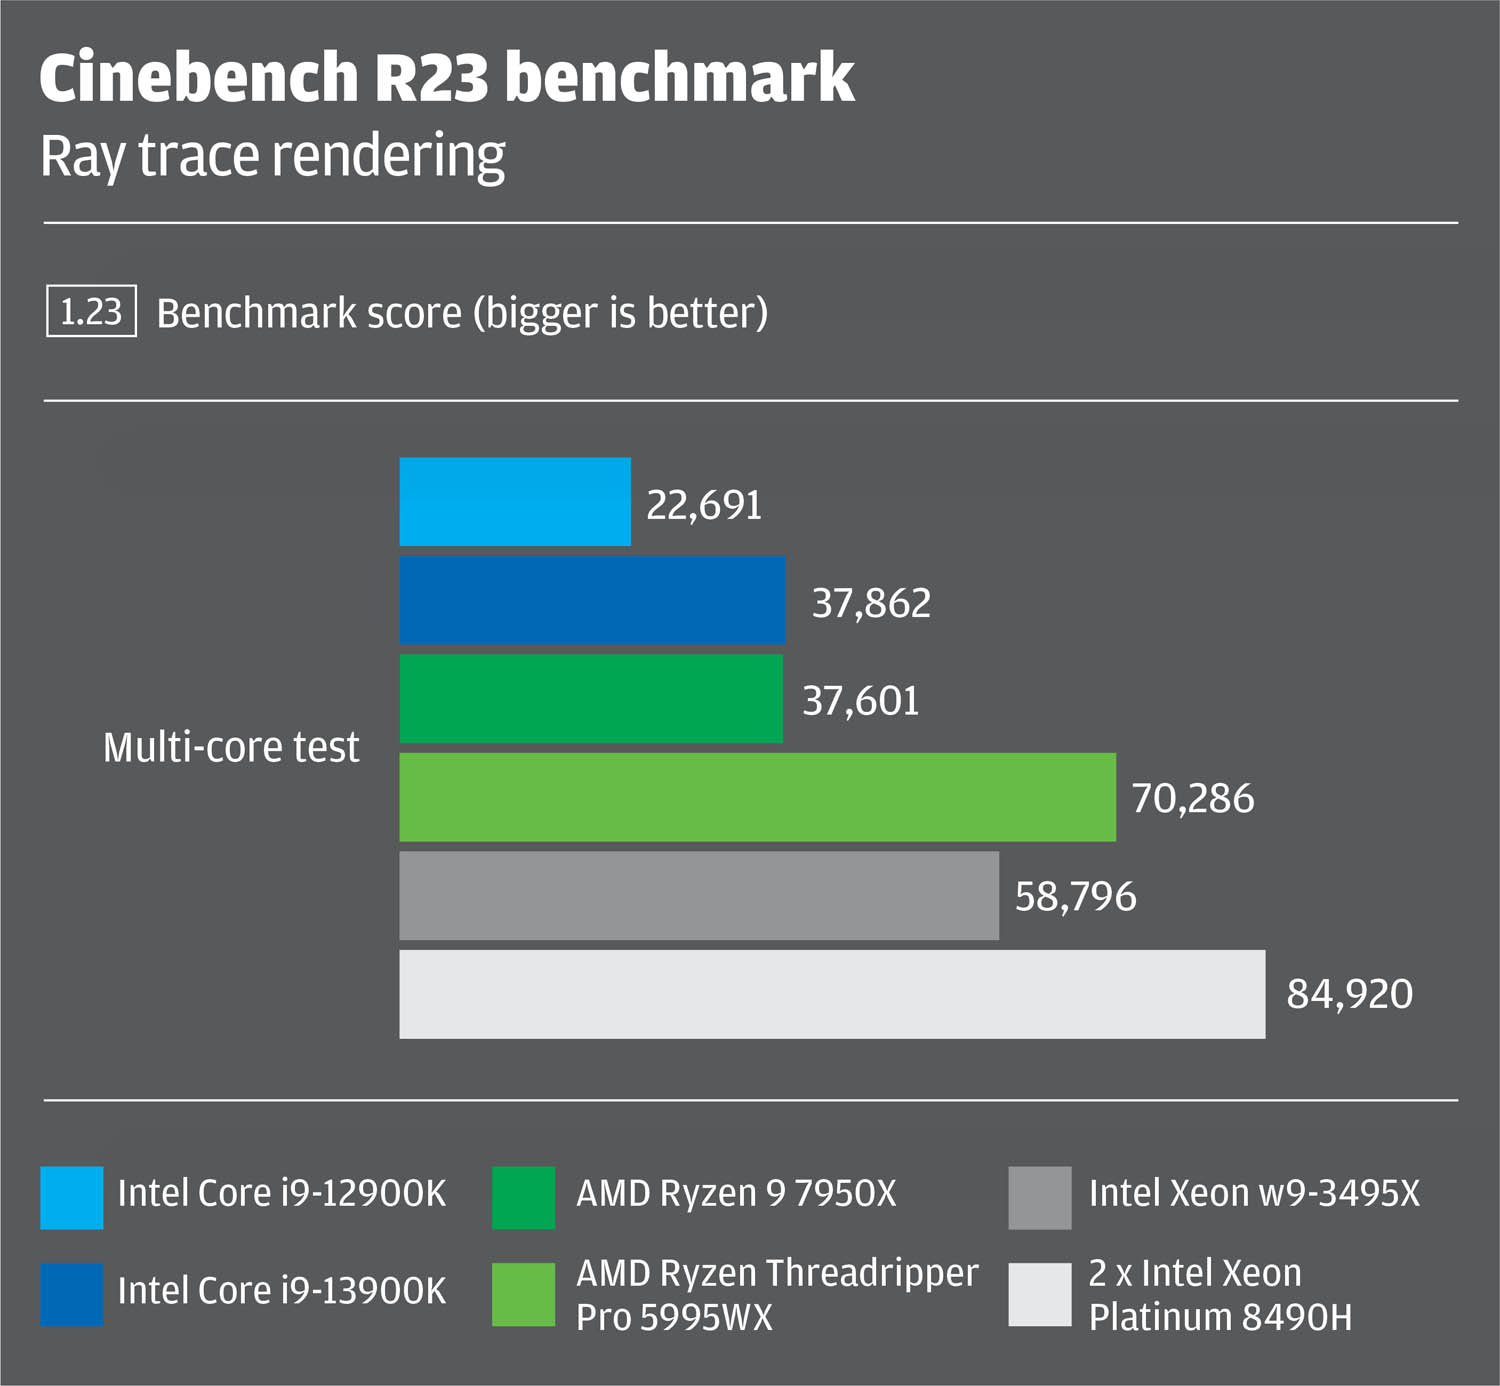 Intel Xeon Sapphire rapids vs AMD Ryzen Threadripper Pro in Cinebench